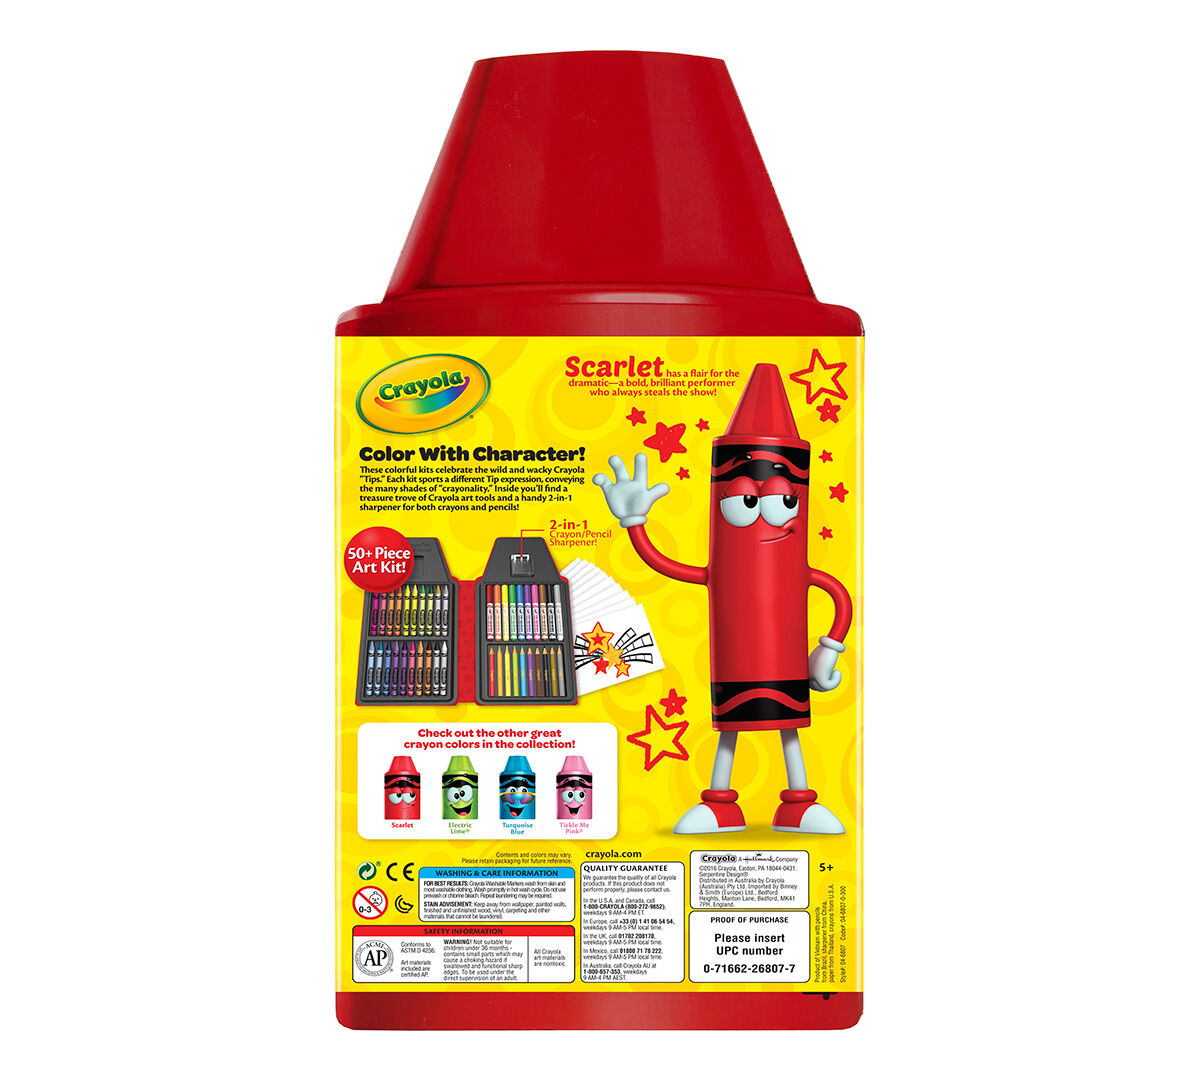 Scarlet Gift Crayons,Markers,Pencils & Sharpener Crayola Tip 50 Piece Art Kit 